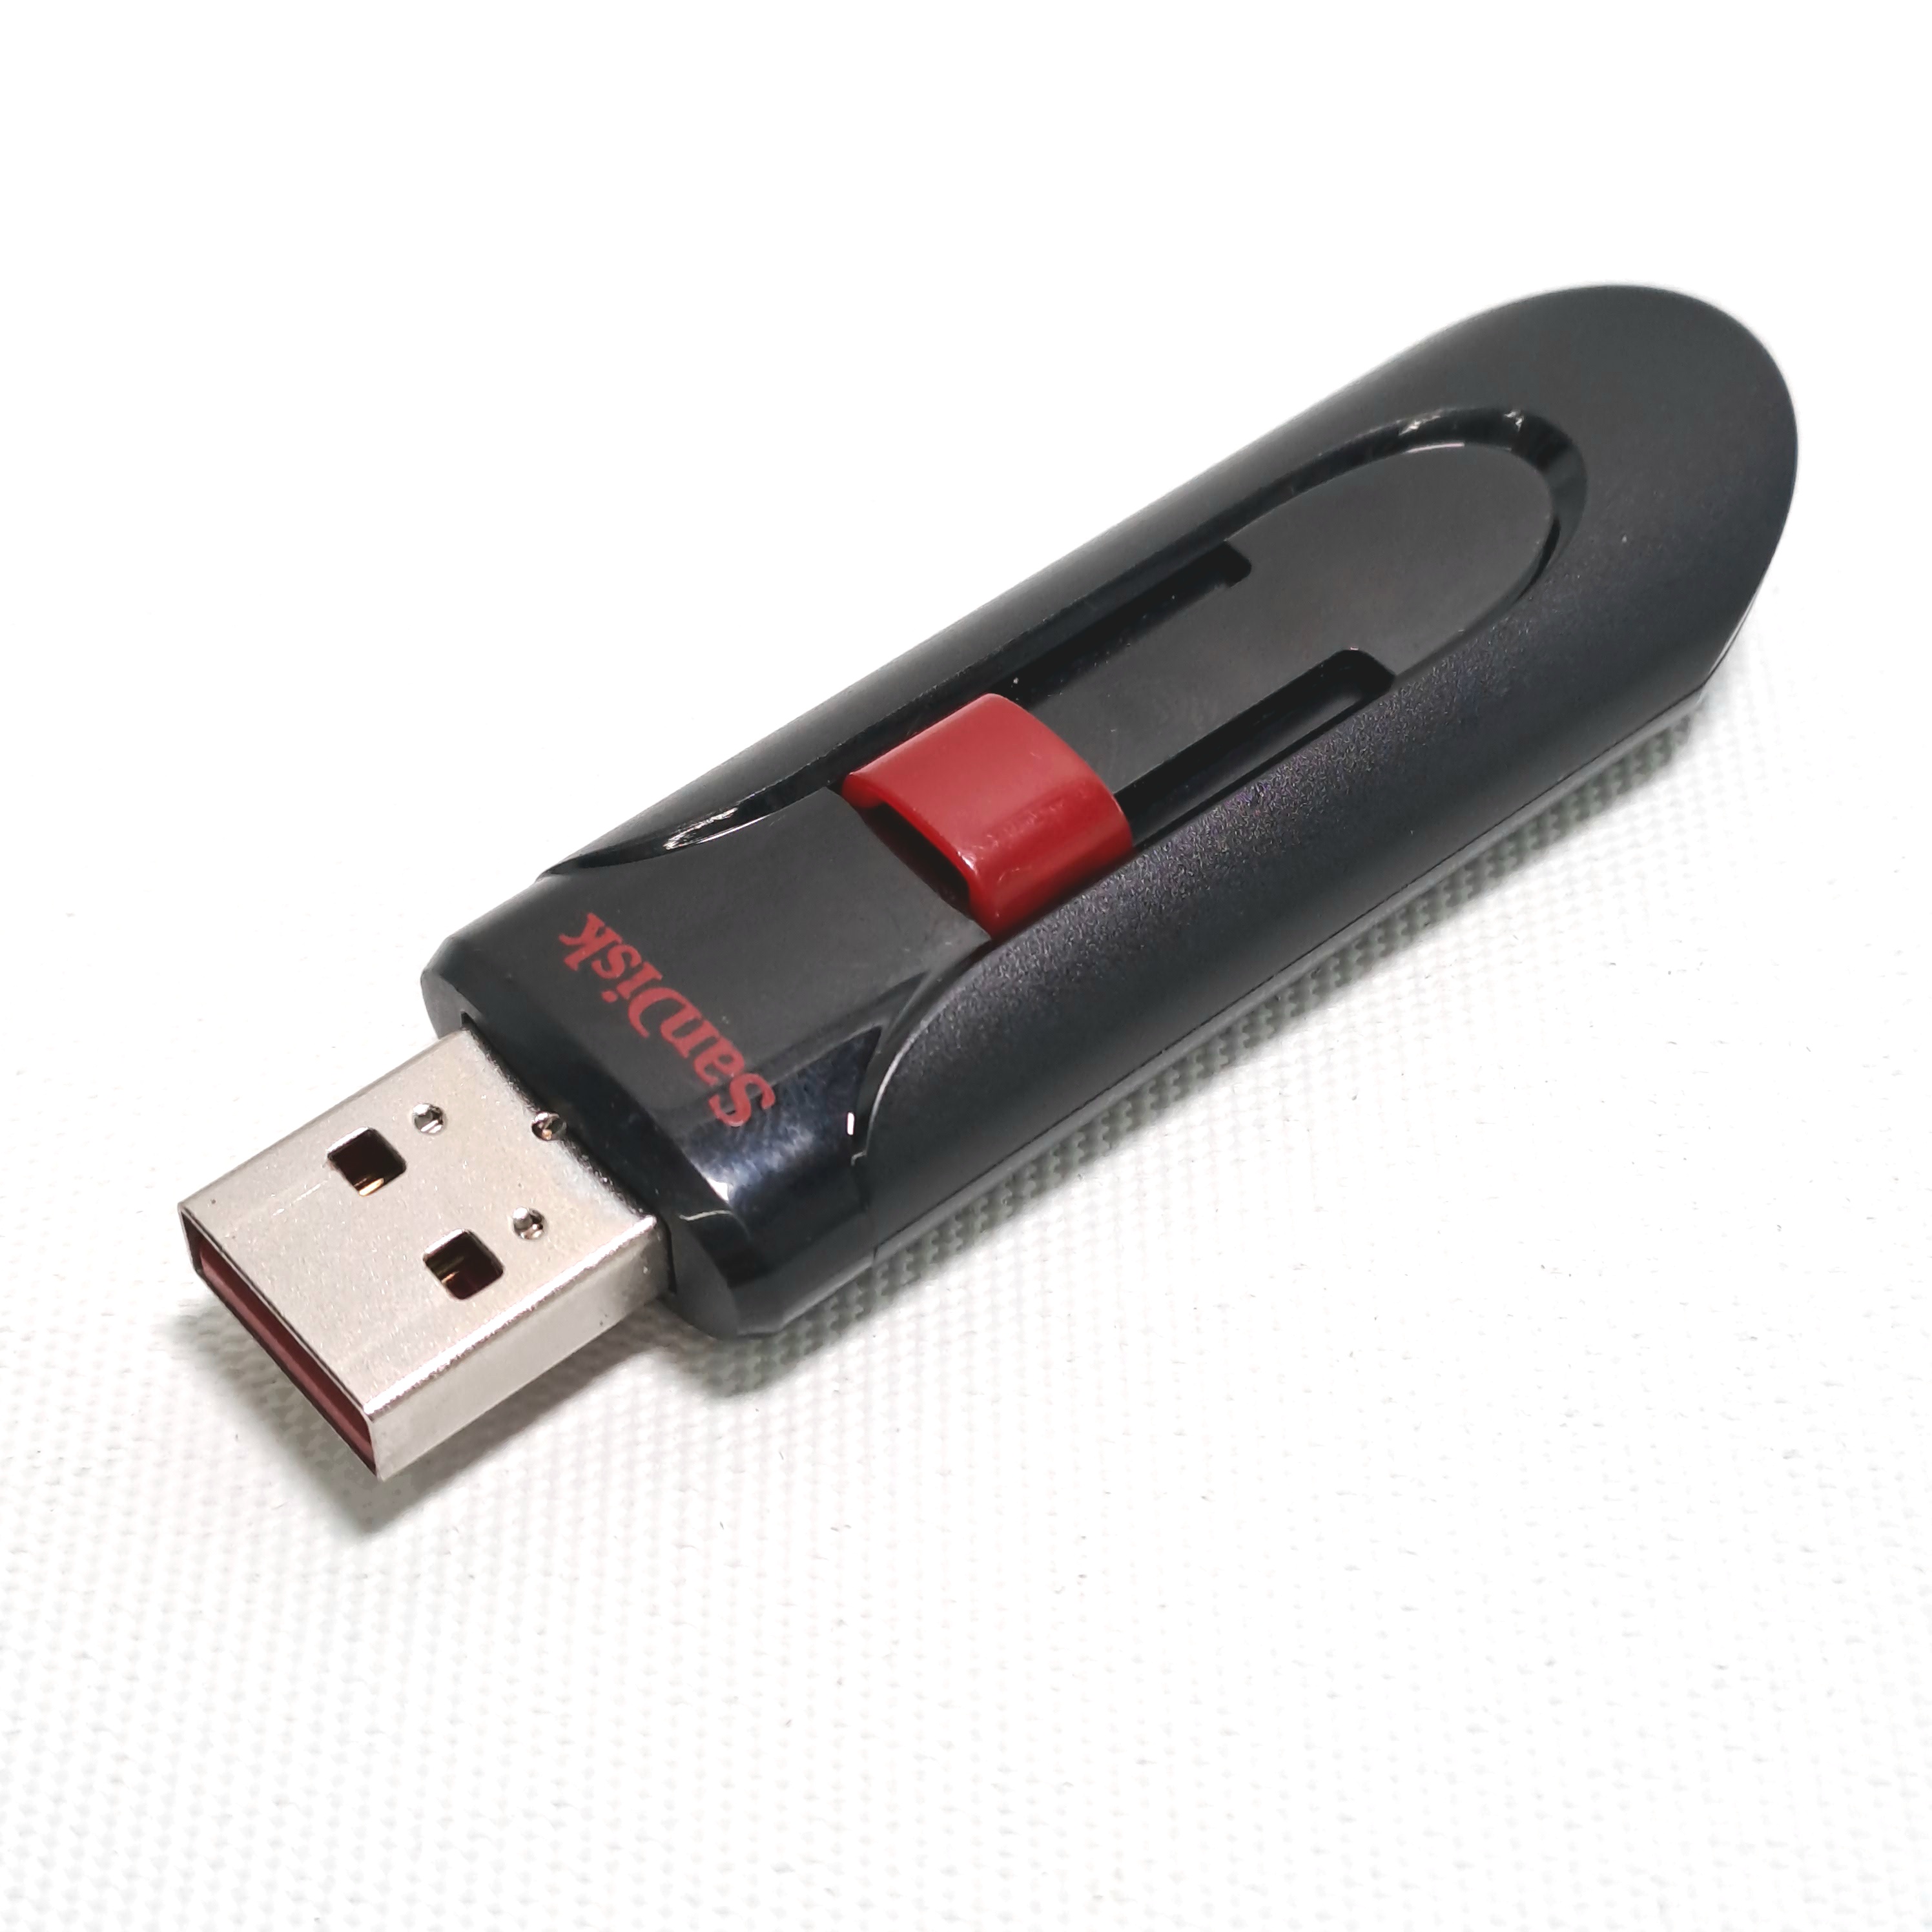 SanDisk Cruzer Glide 3.0 USB Flash Drive, CZ600 64GB